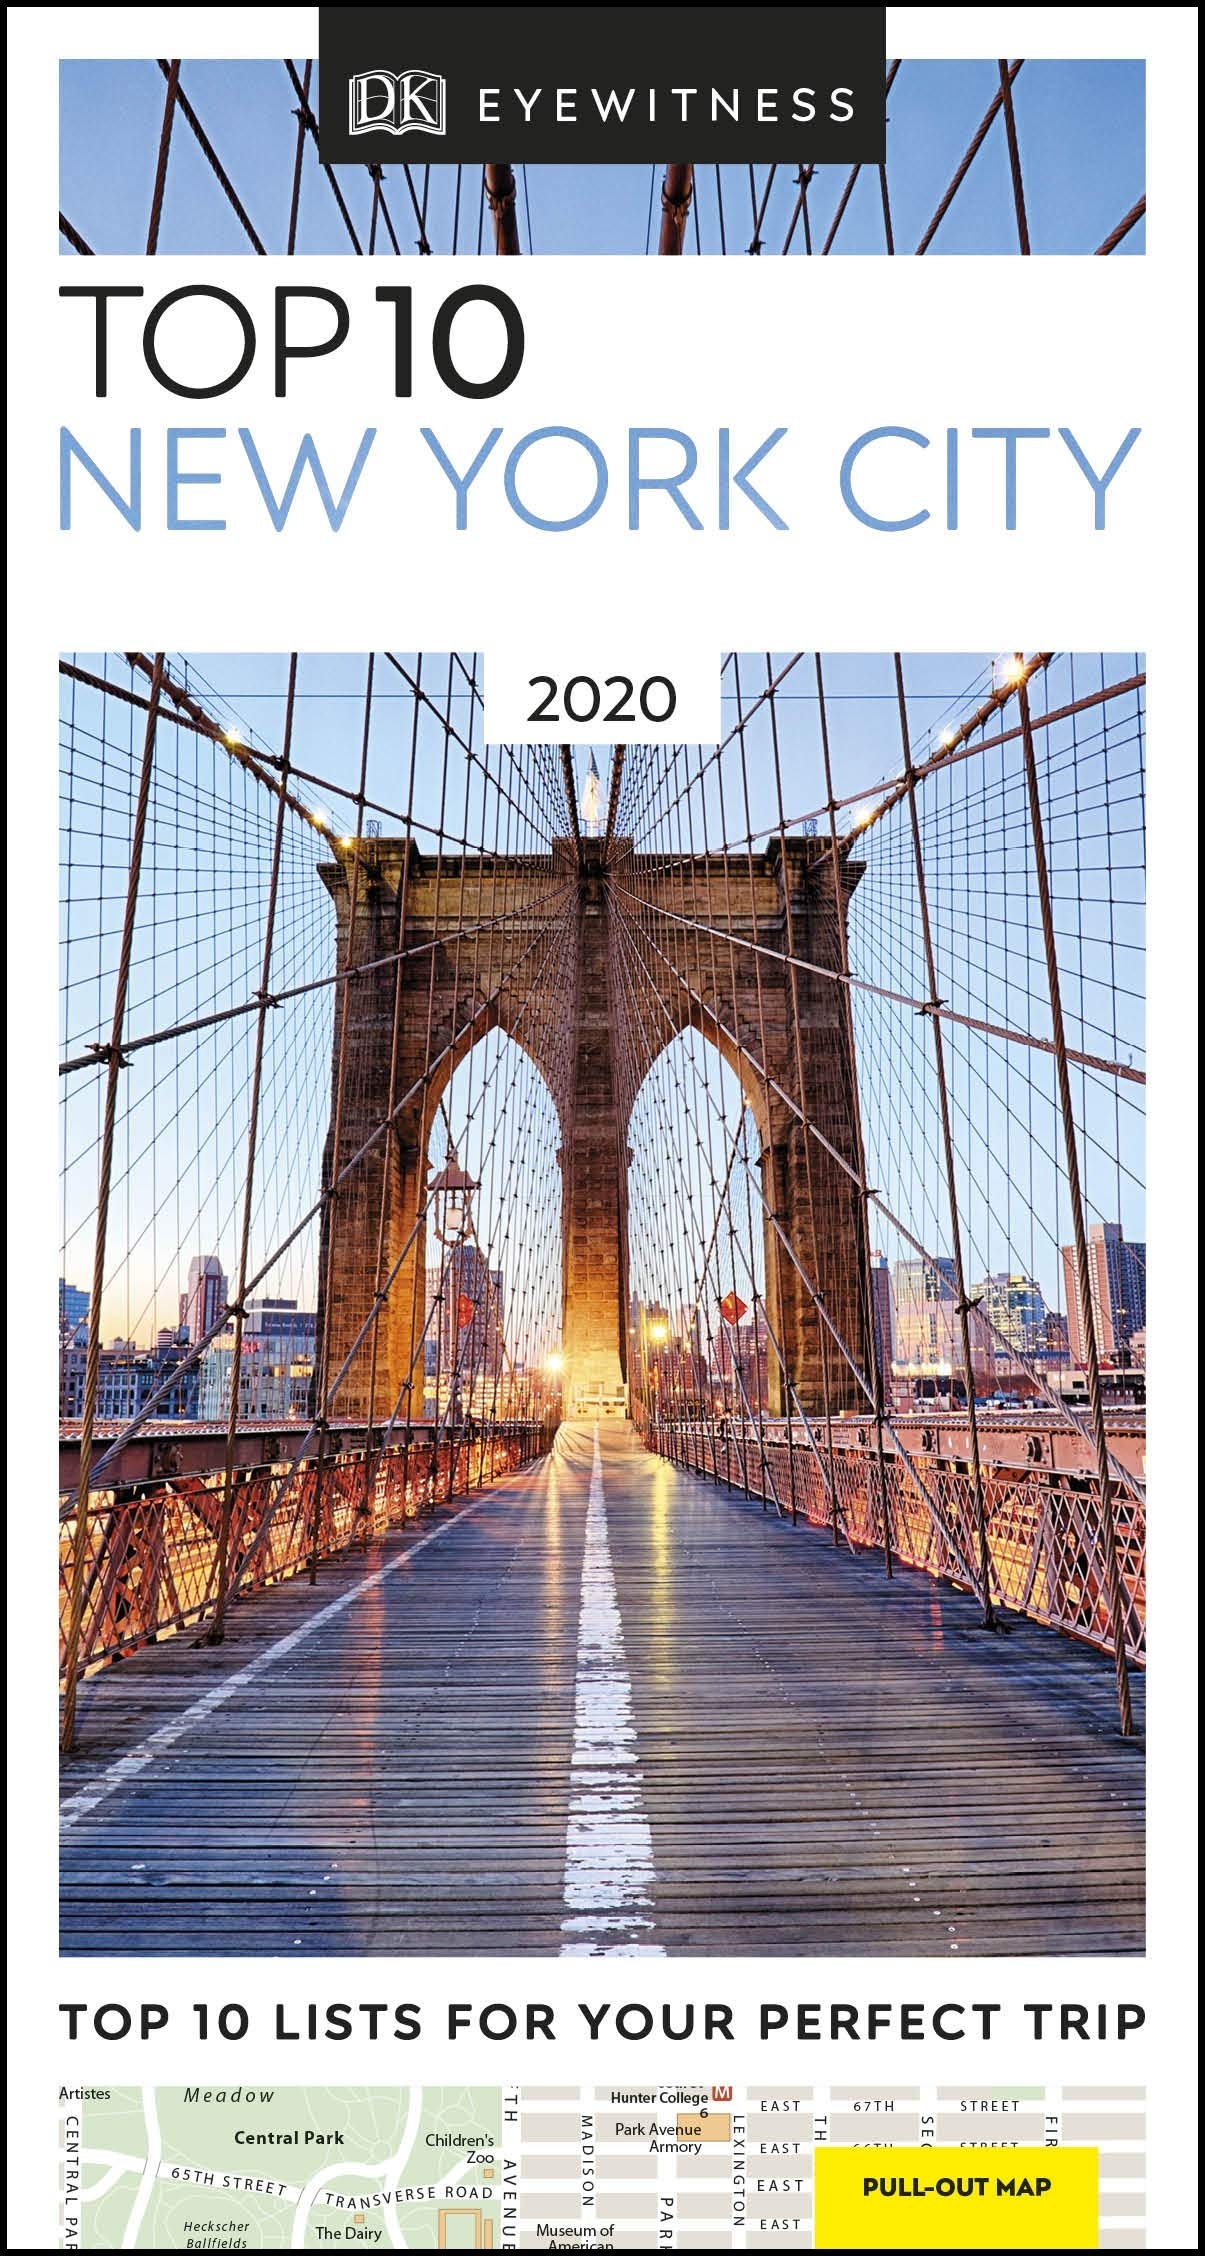 DK Eyewitness Top 10 New York City (2020) (Pocket Travel Guide)